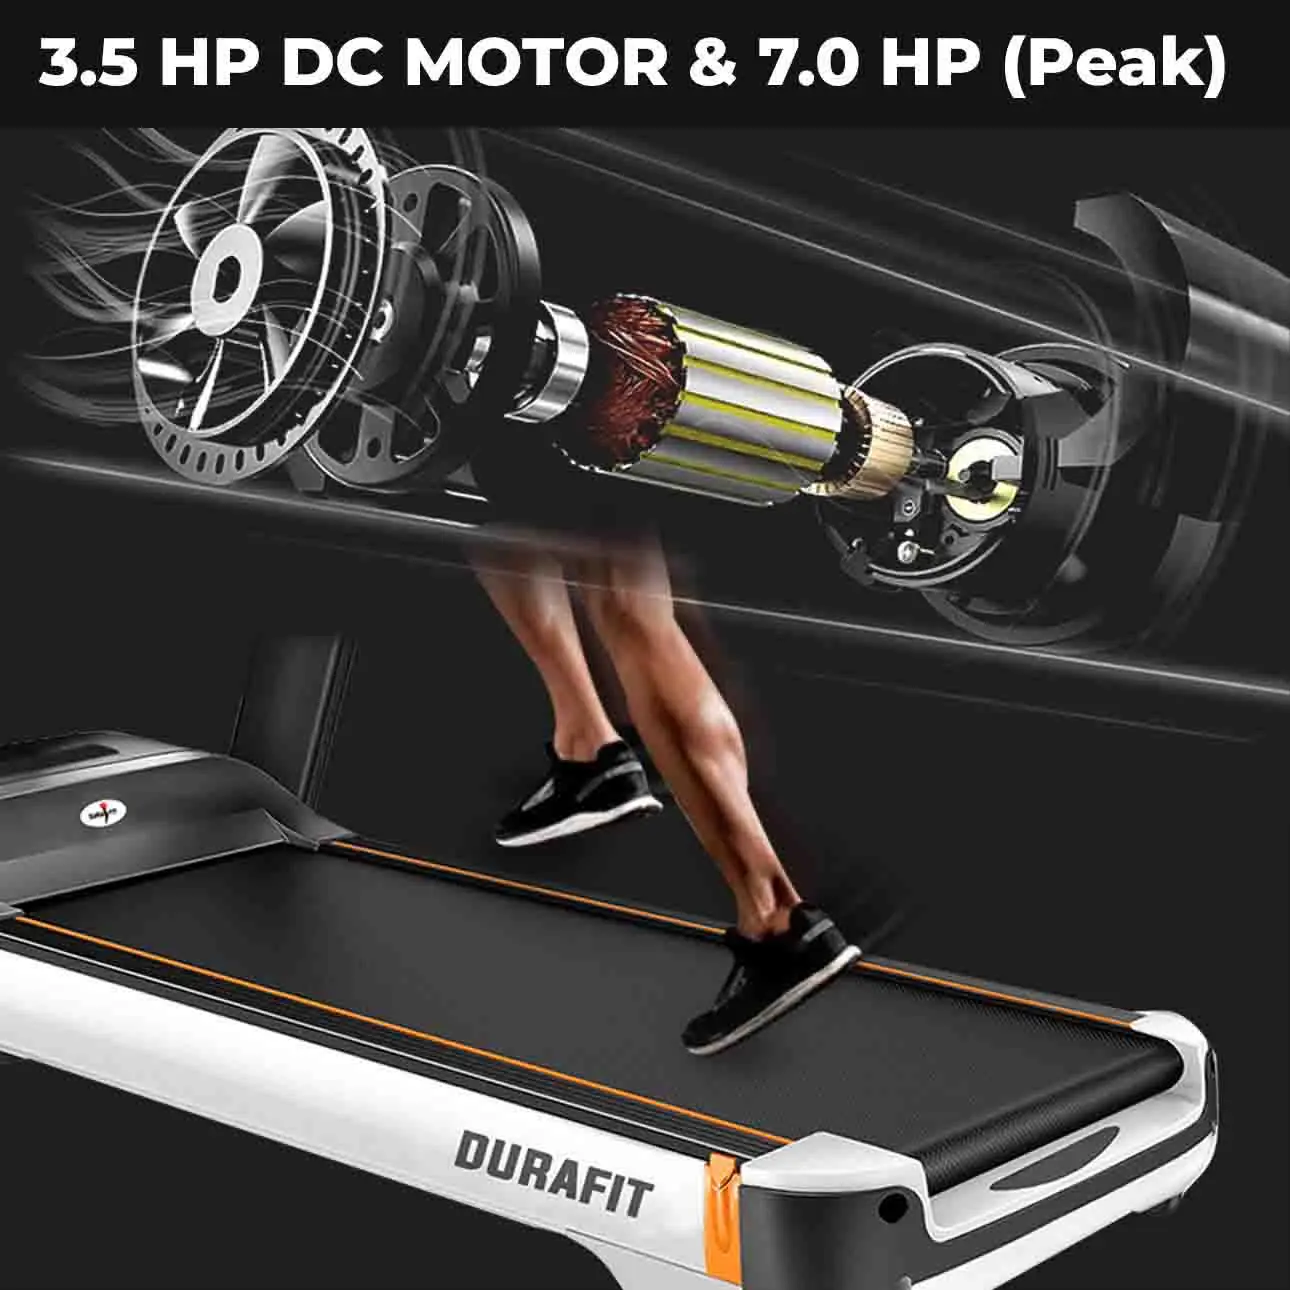 Durafit Focus Treadmill with 3.5 HP DC Motor